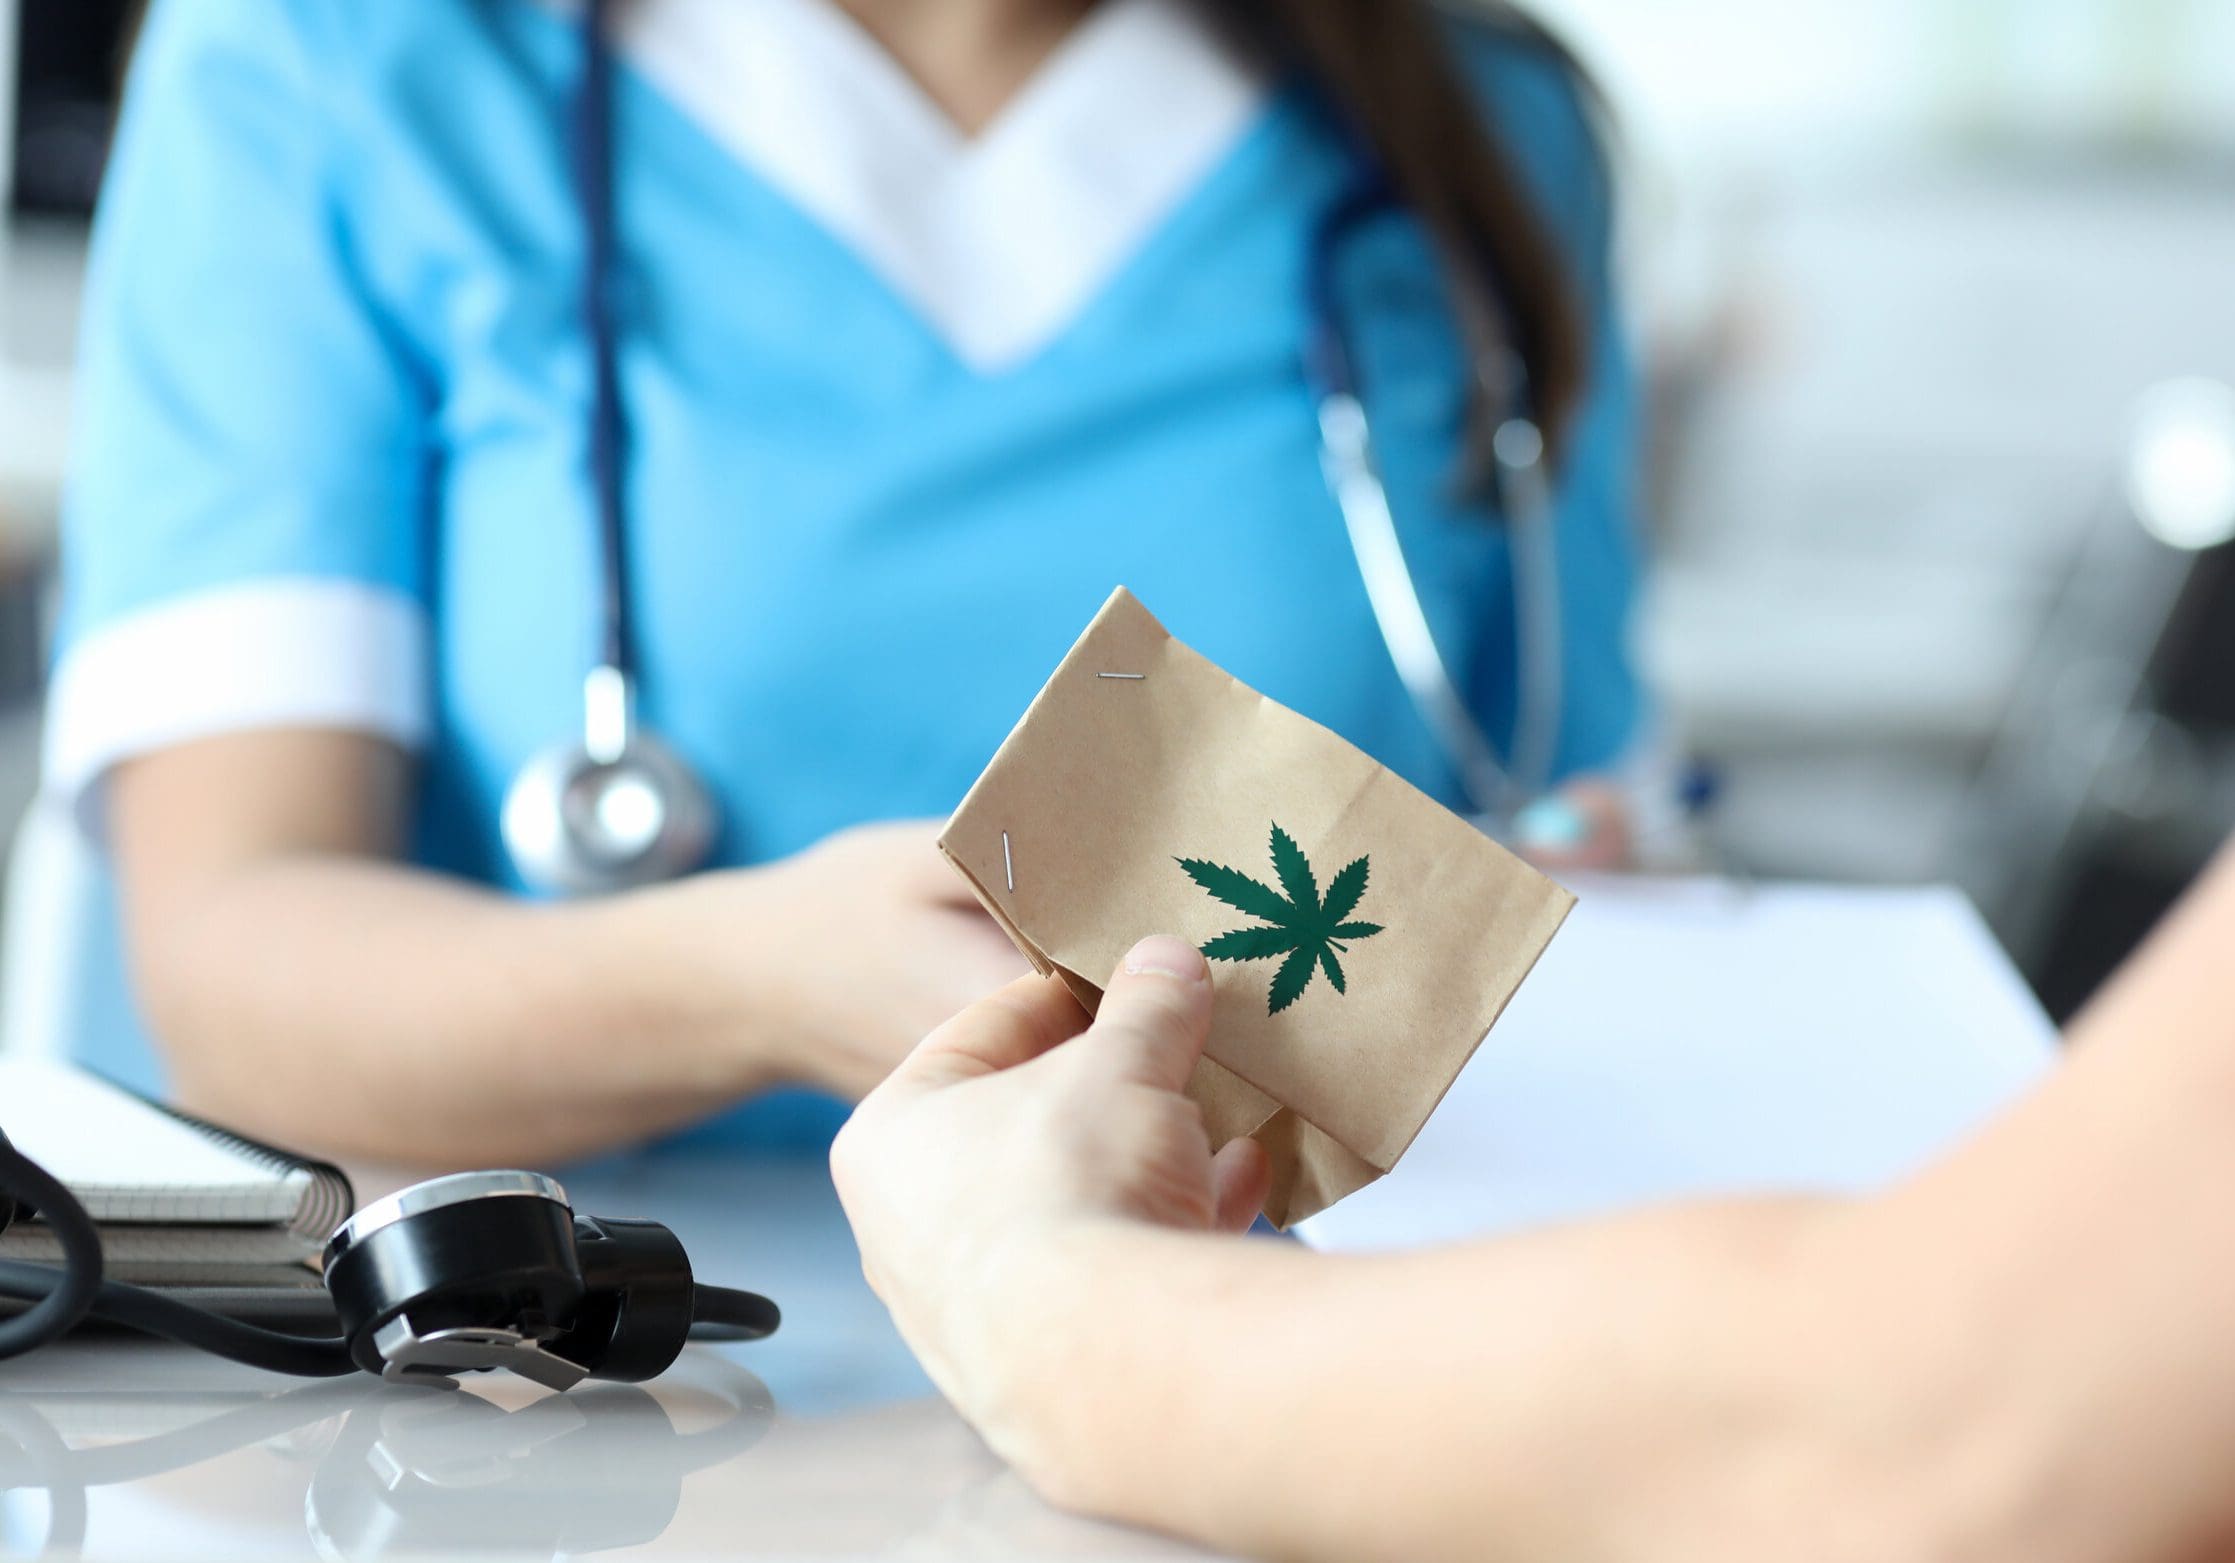 Female doctor writes prescription for medical marijuana to patient in hospital office. Legal marijuanna treatment concept